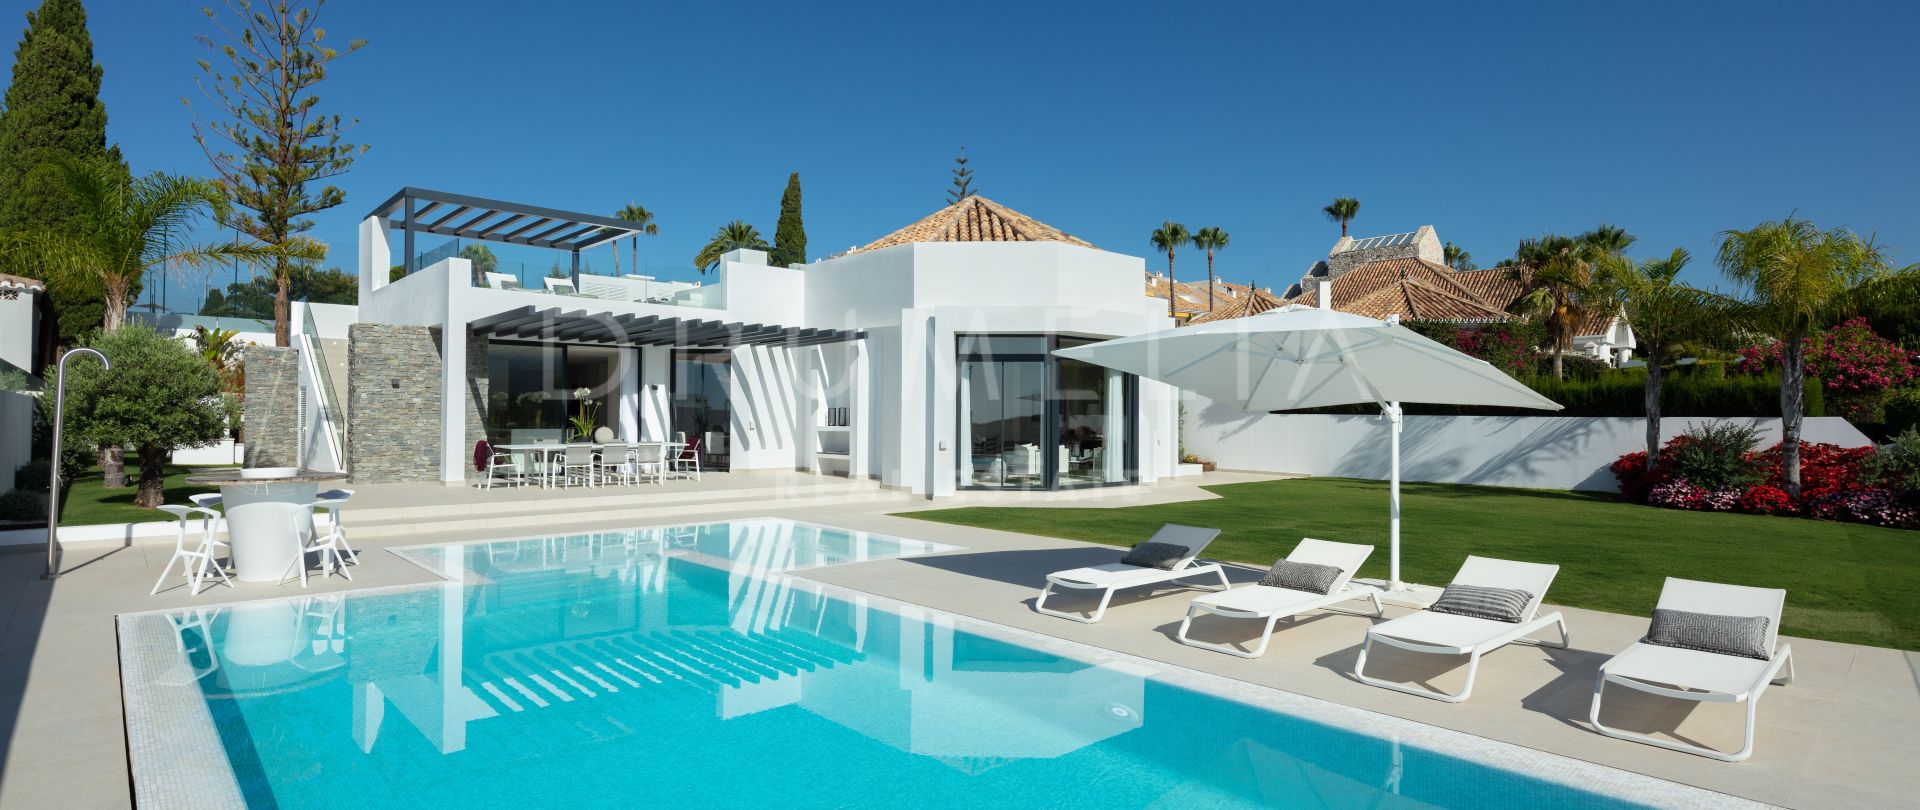 Villa Elia - Hochmoderne, moderne Luxusvilla am Golfplatz, Aloha Golf Club, Nueva Andalucía, Marbella